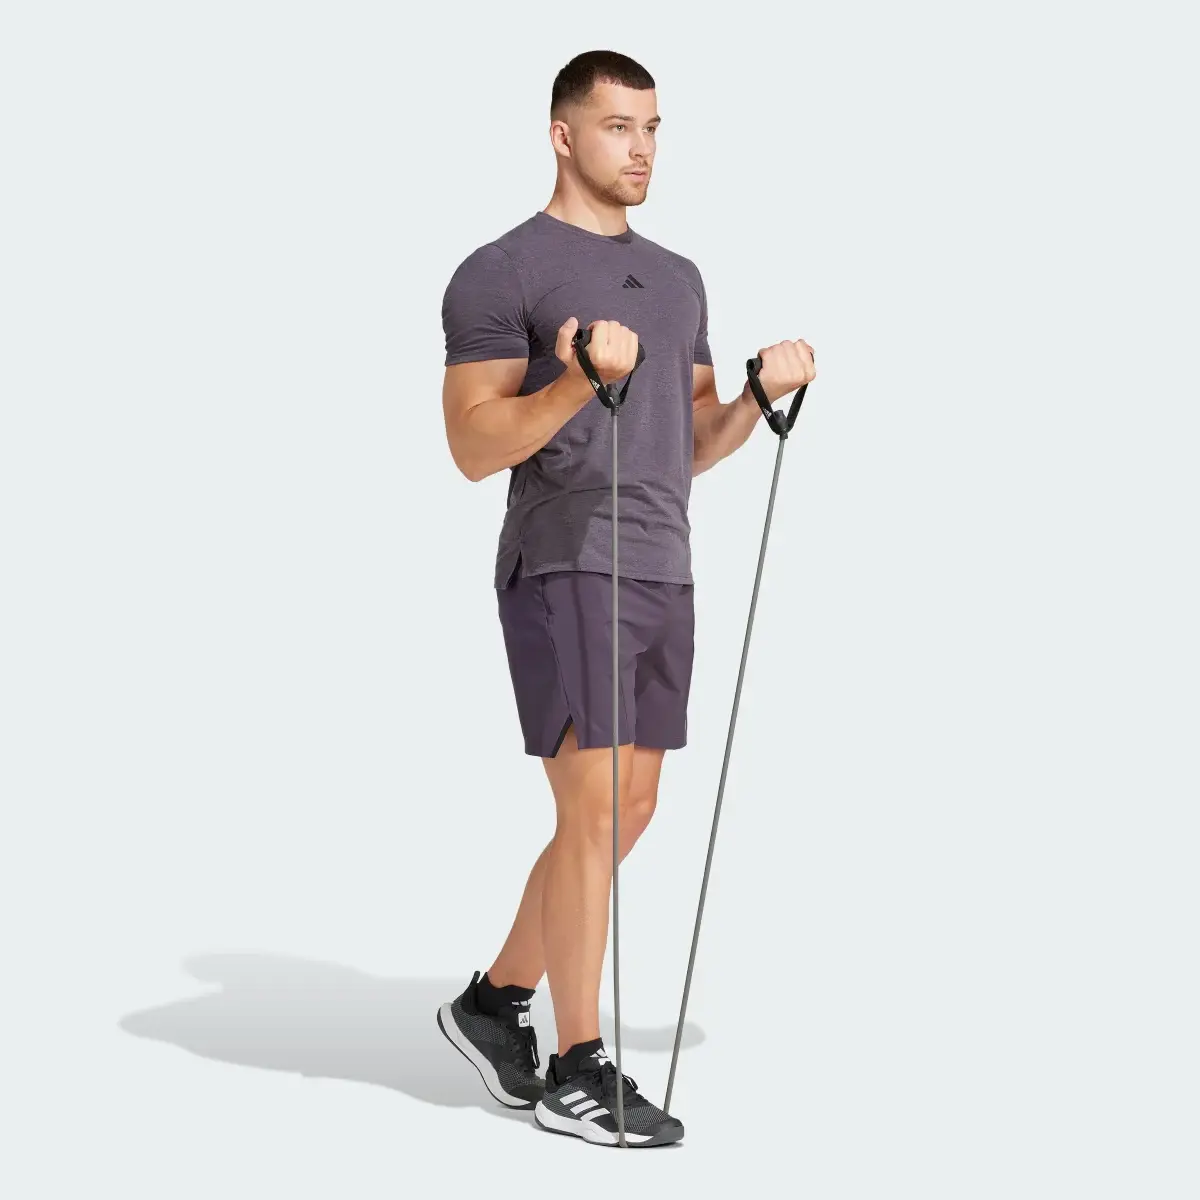 Adidas Short Designed for Training Workout. 3